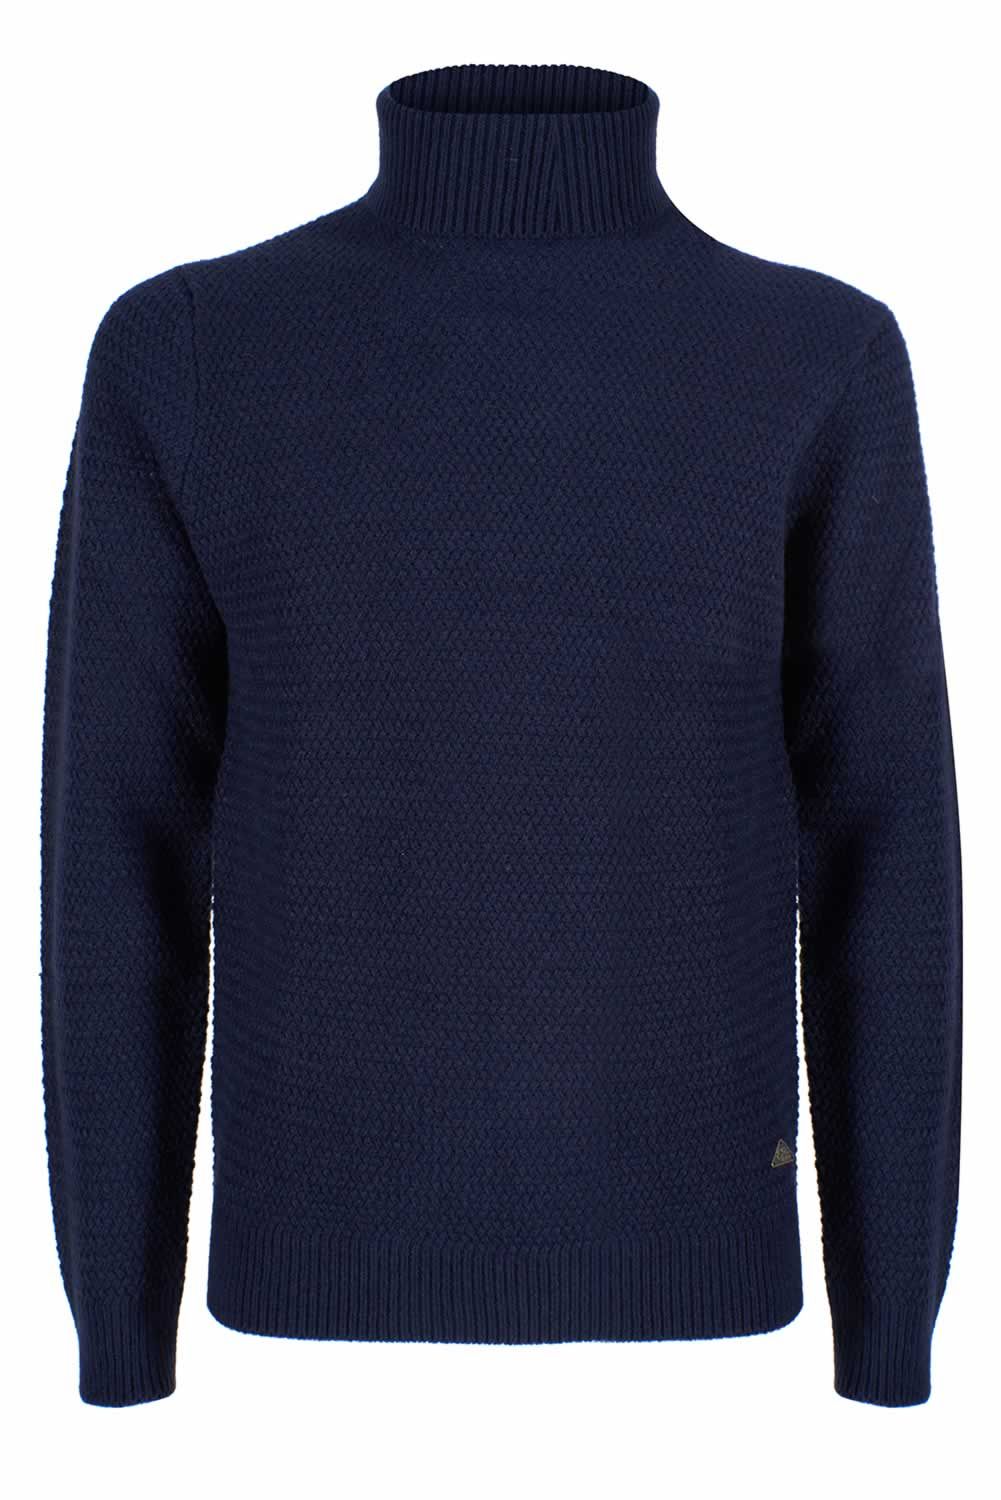 Yes Zee Blue Acrylic Sweater